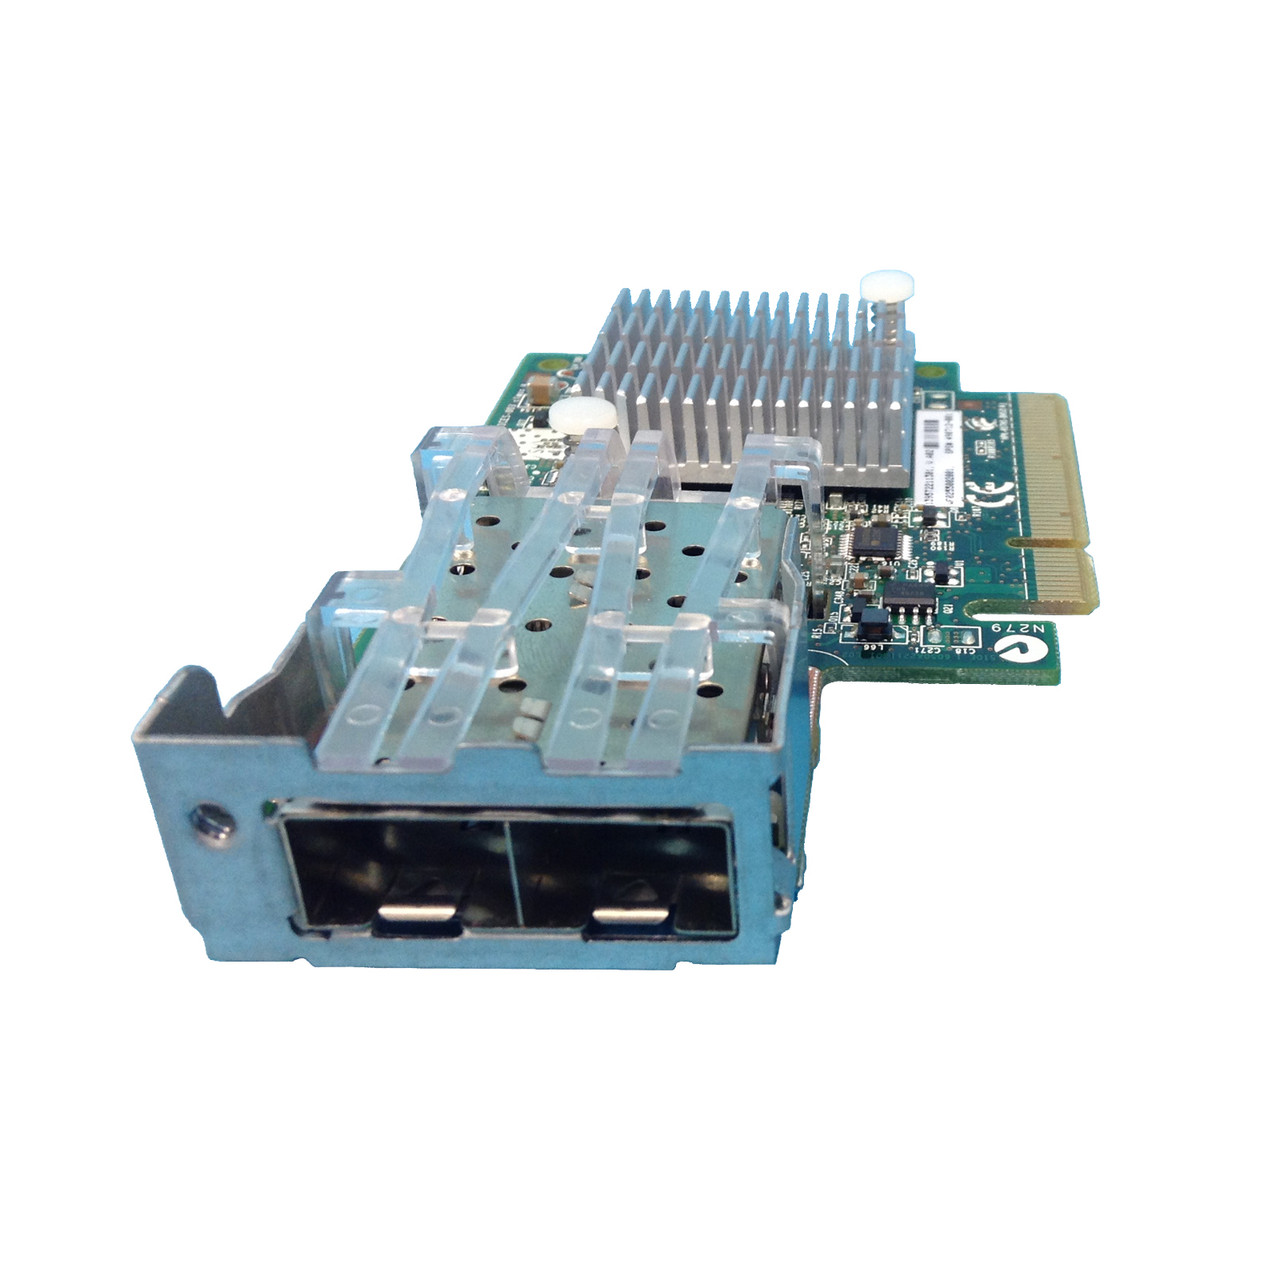 HPE FlexFabric 700749-001 2-Port 10GbE 534FLR-SFP+ Adapter for G9